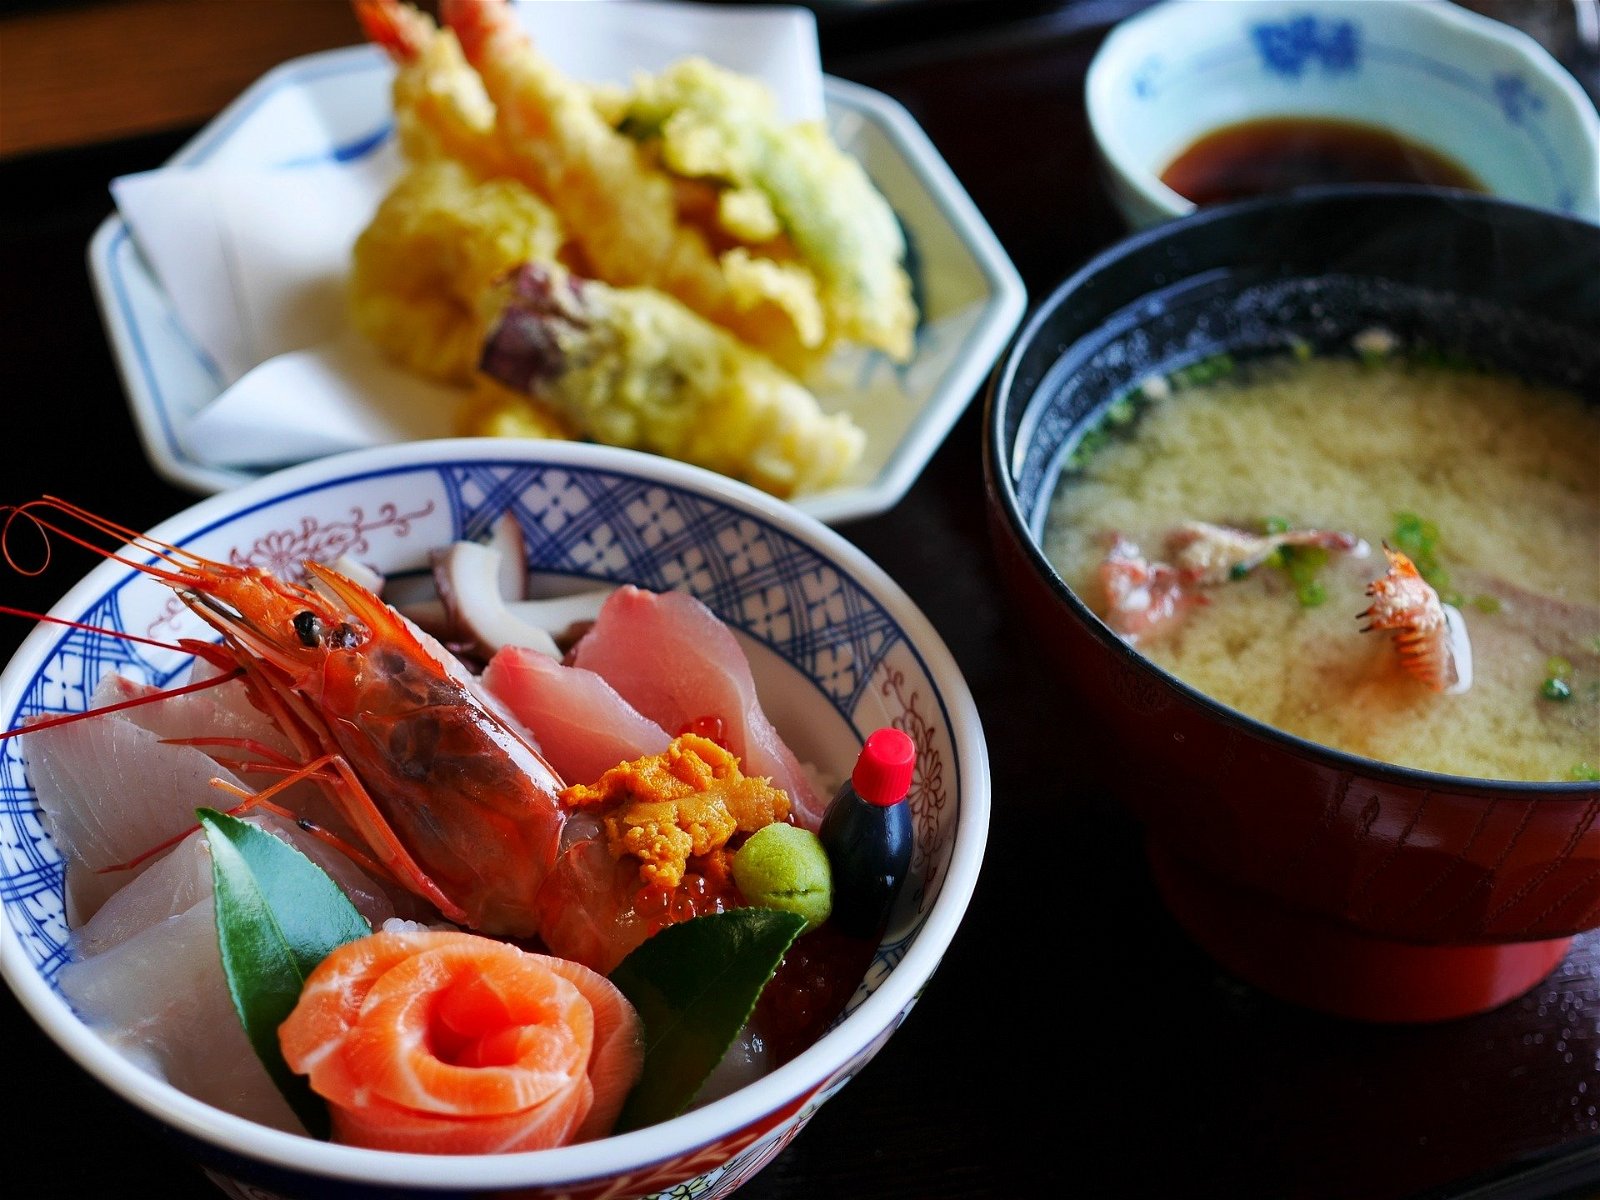 10 Restoran Jepang di Jakarta Buat Makan Bareng Temen